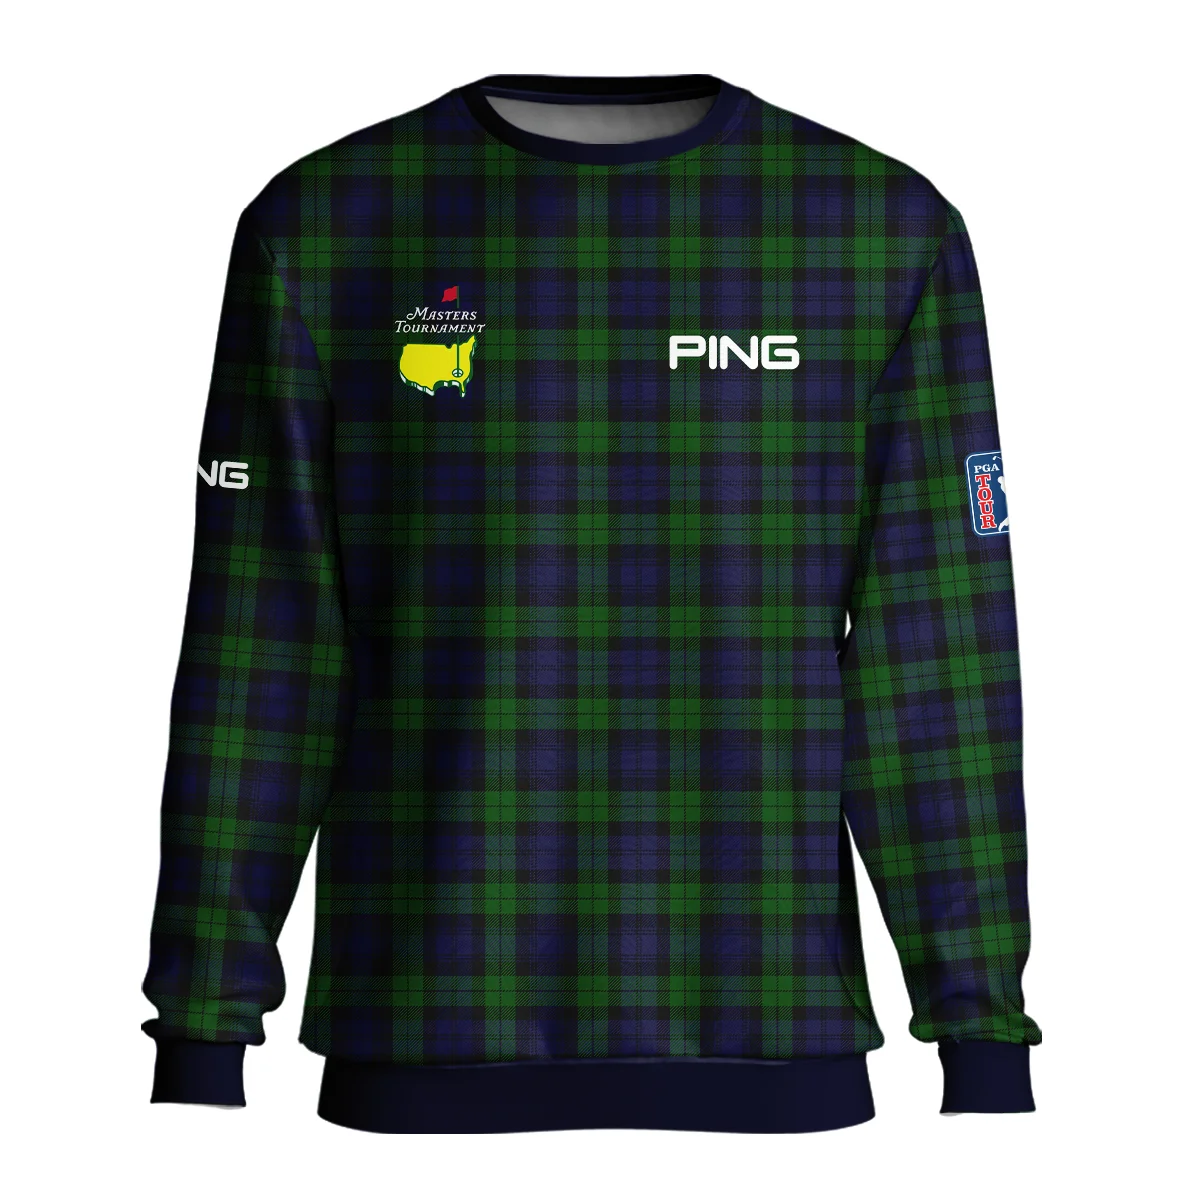 Masters Tournament Ping Golf Unisex Sweatshirt Sports Green Purple Black Watch Tartan Plaid All Over Print Sweatshirt